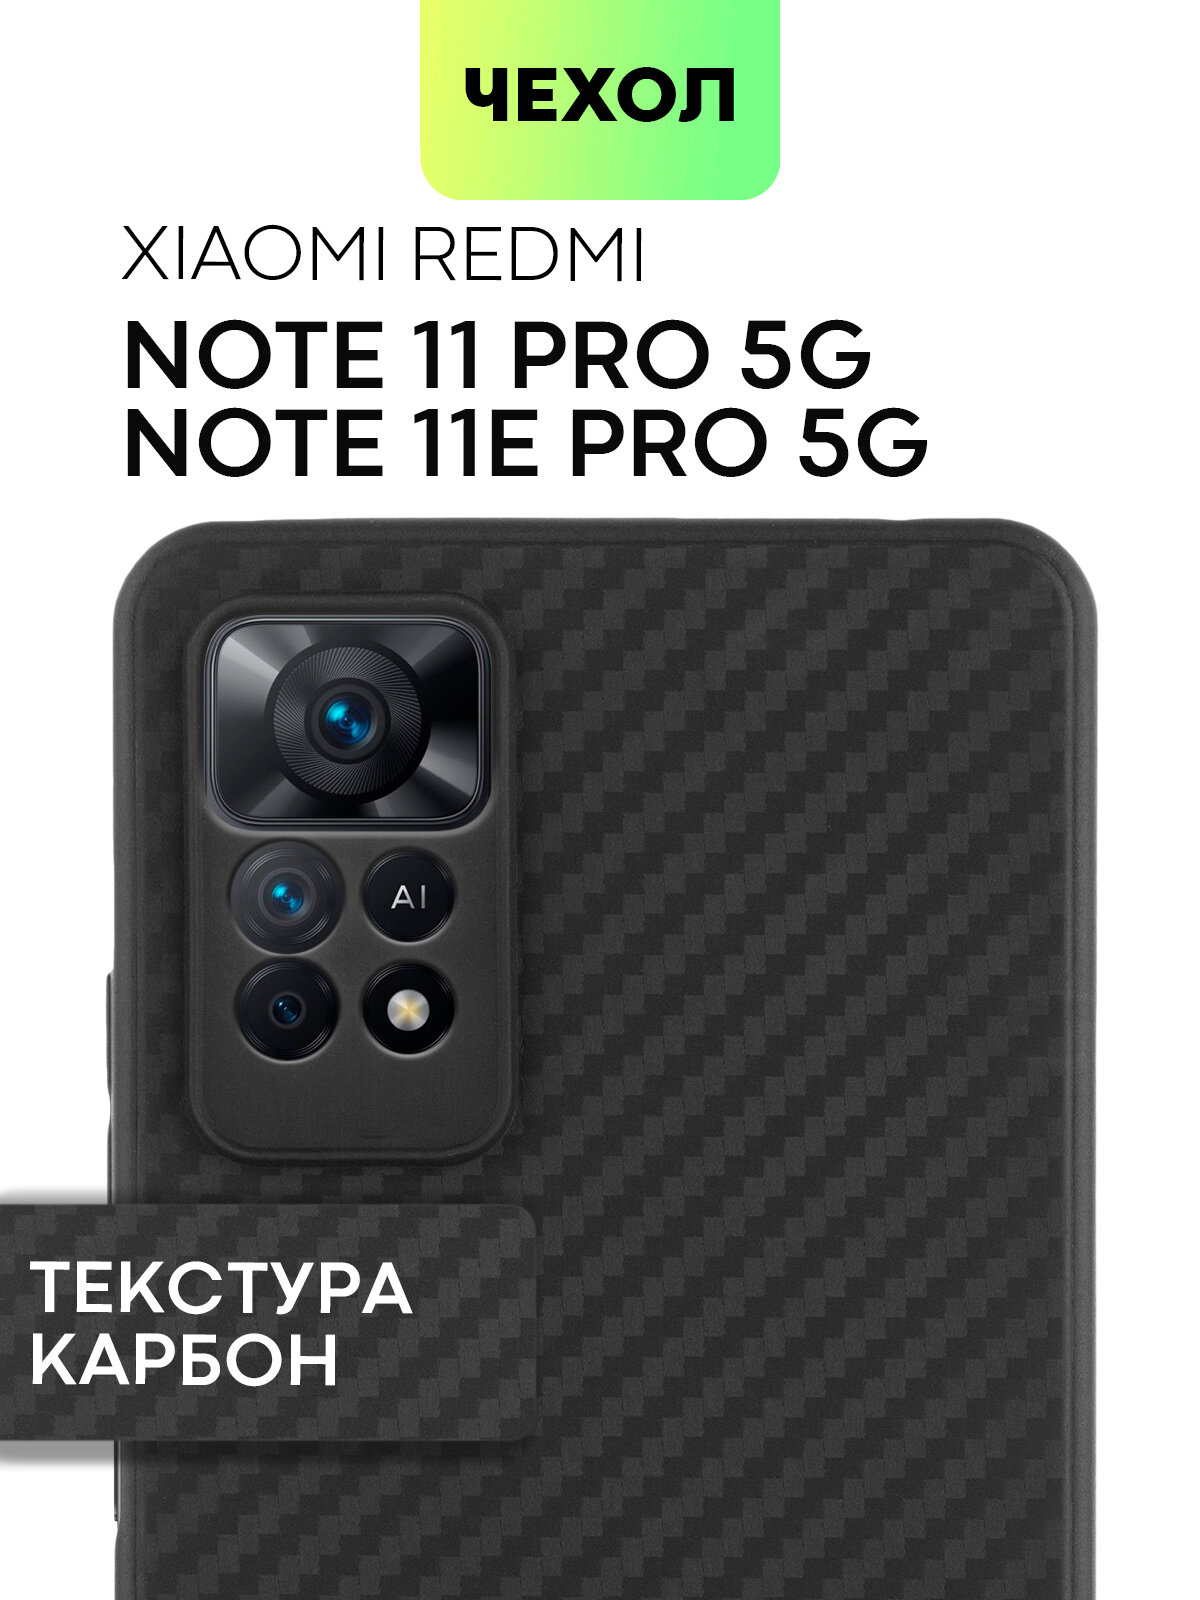 Чехол для Xiaomi Redmi Note 11 Pro и Note 11E Pro (Редми Ноут 11 Про, Нот 11Е Про) тонкий с текстурой карбон, надежно лежит в руке, черный, BROSCORP